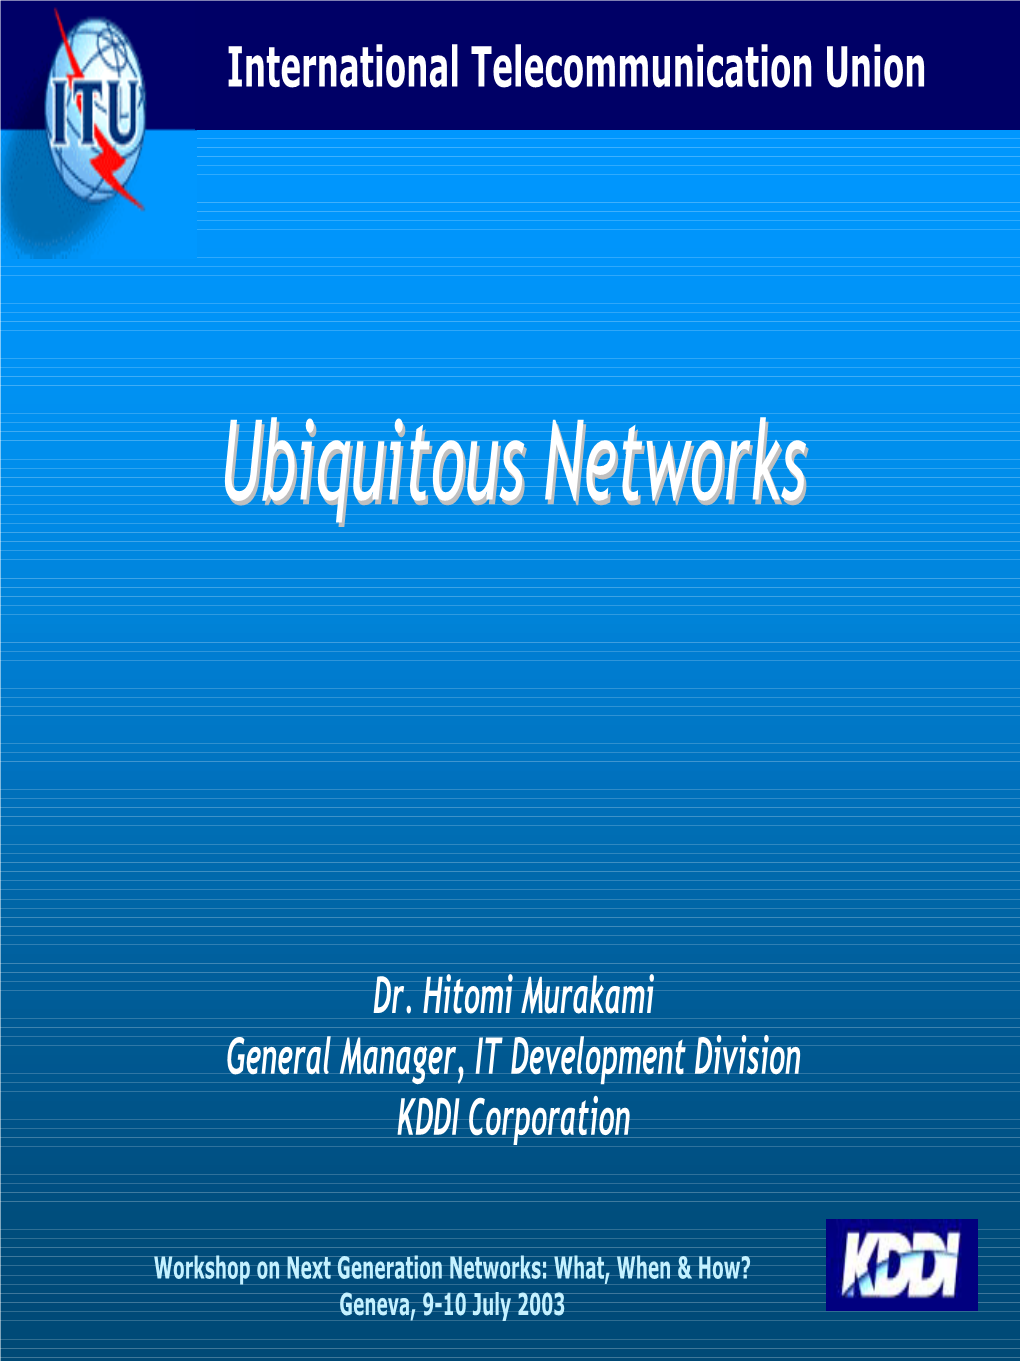 Ubiquitous Networksnetworks